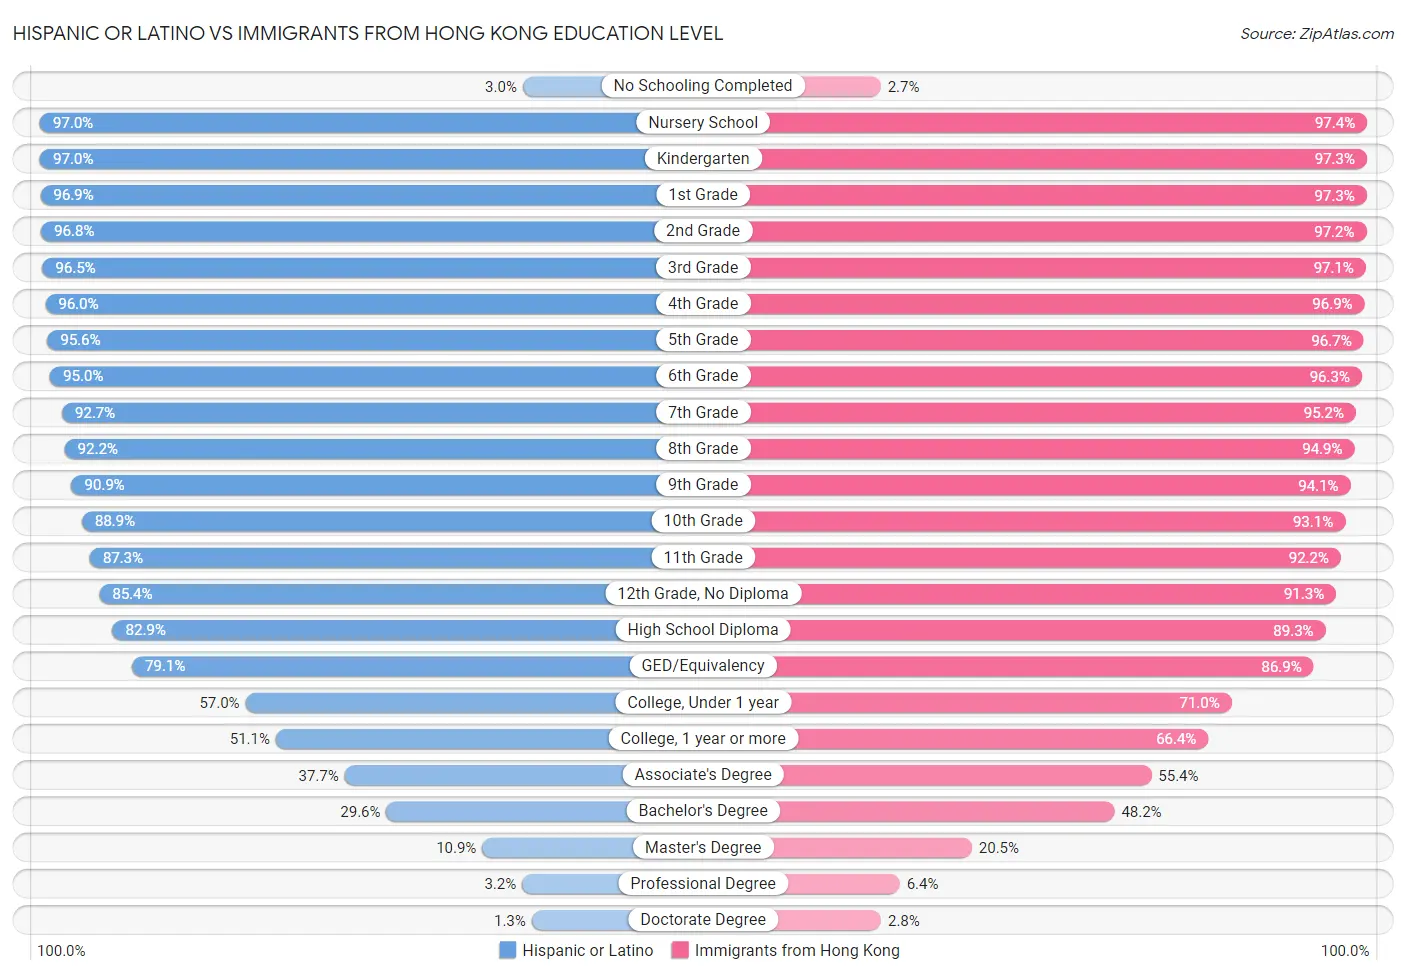 Hispanic or Latino vs Immigrants from Hong Kong Education Level